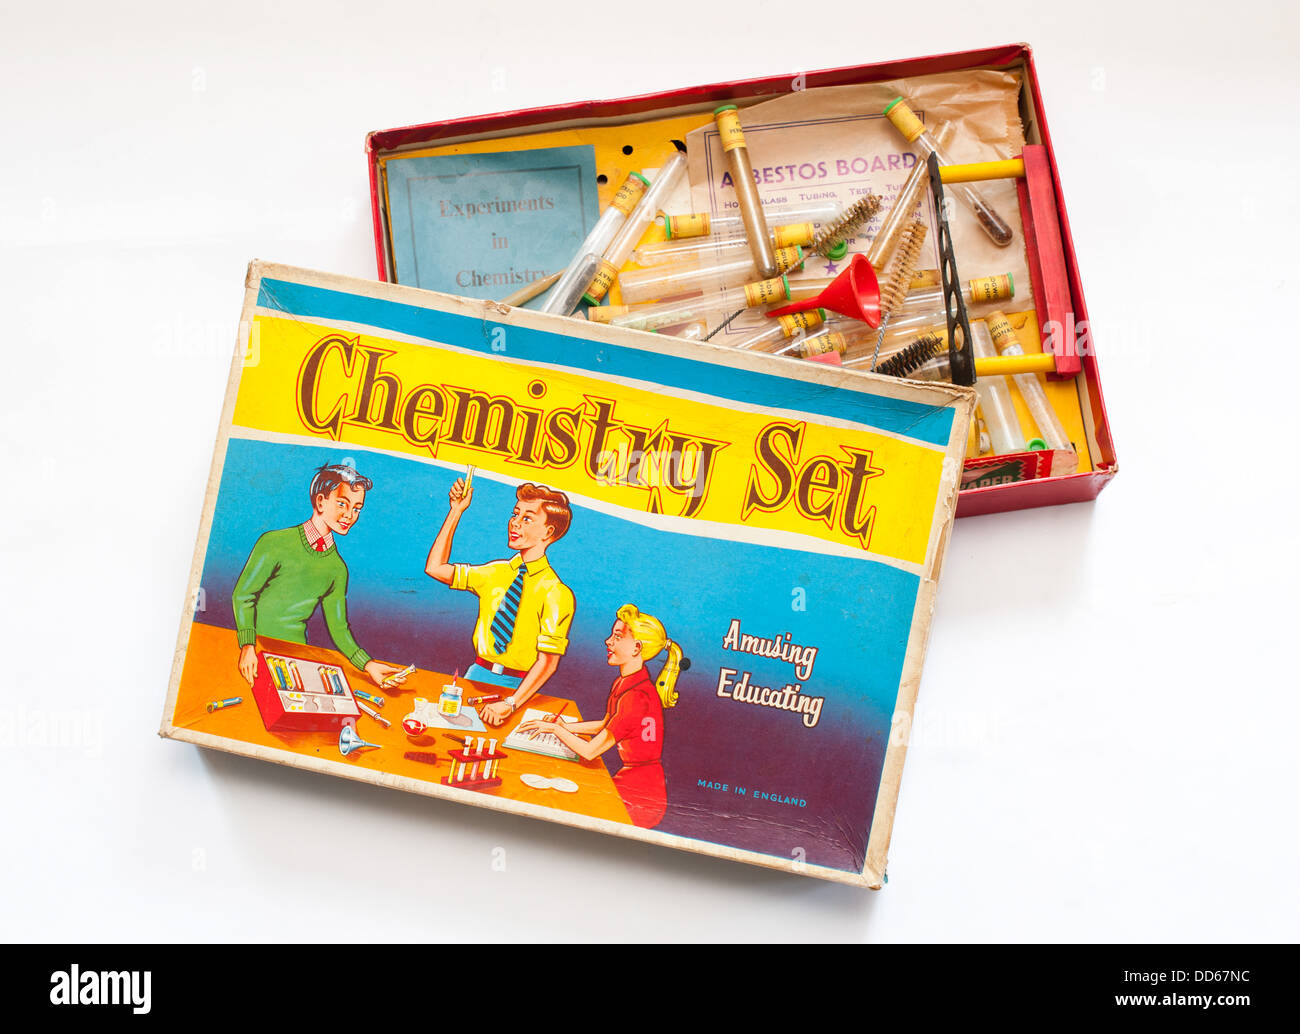 Chemistry set Stock Photo